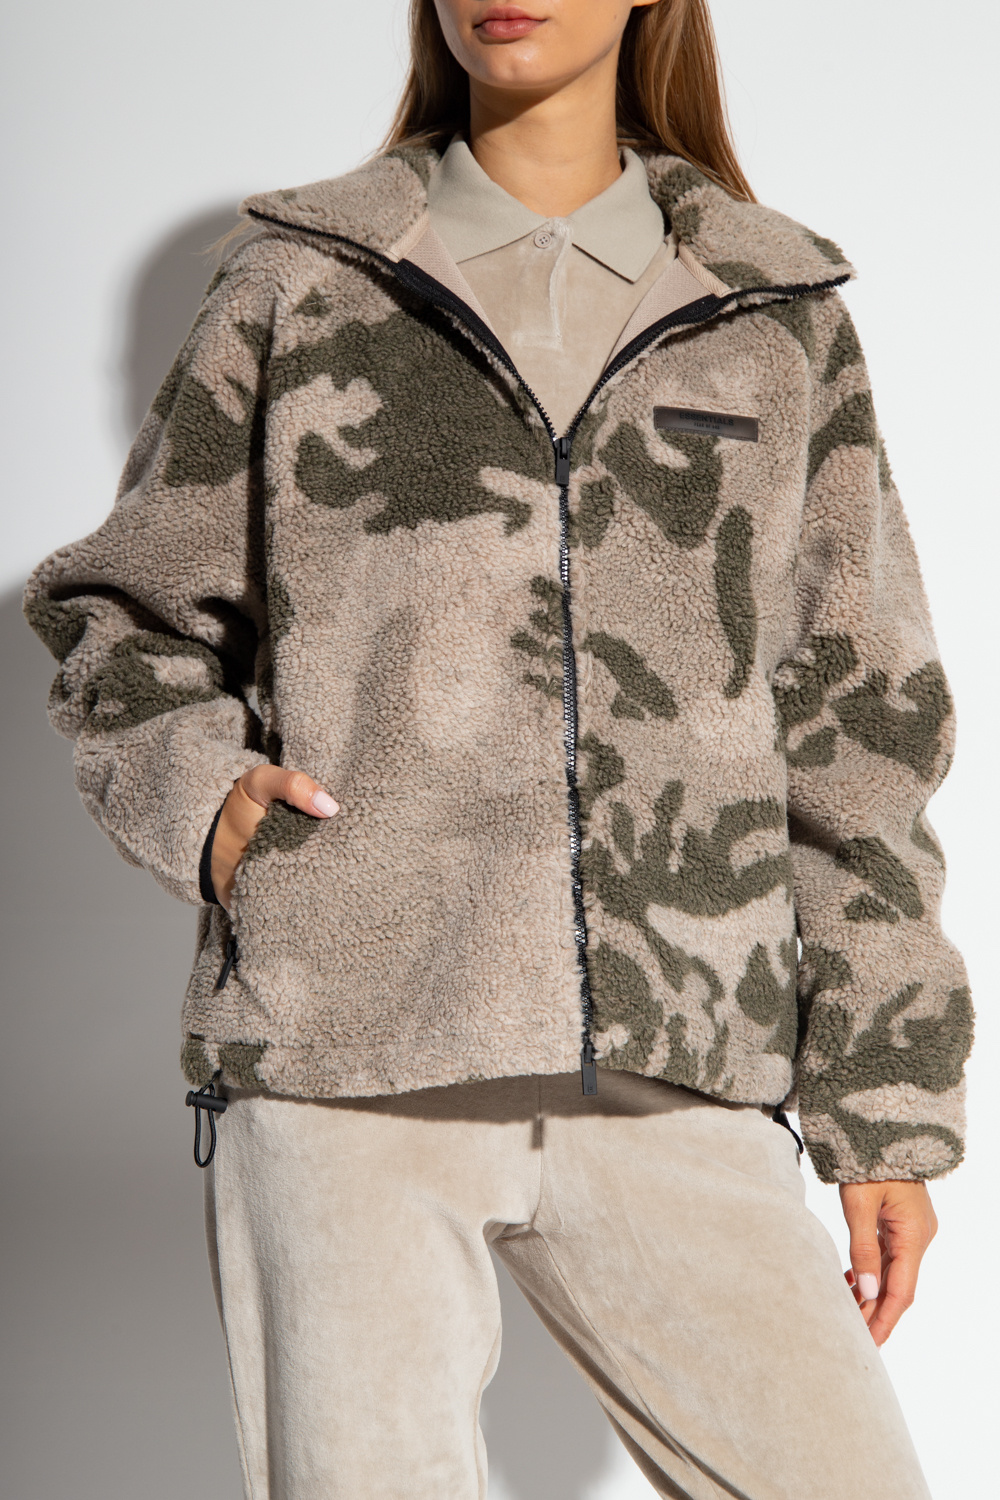 Hervé Léger Clothing - Multicolour Fleece hoodie with camo pattern